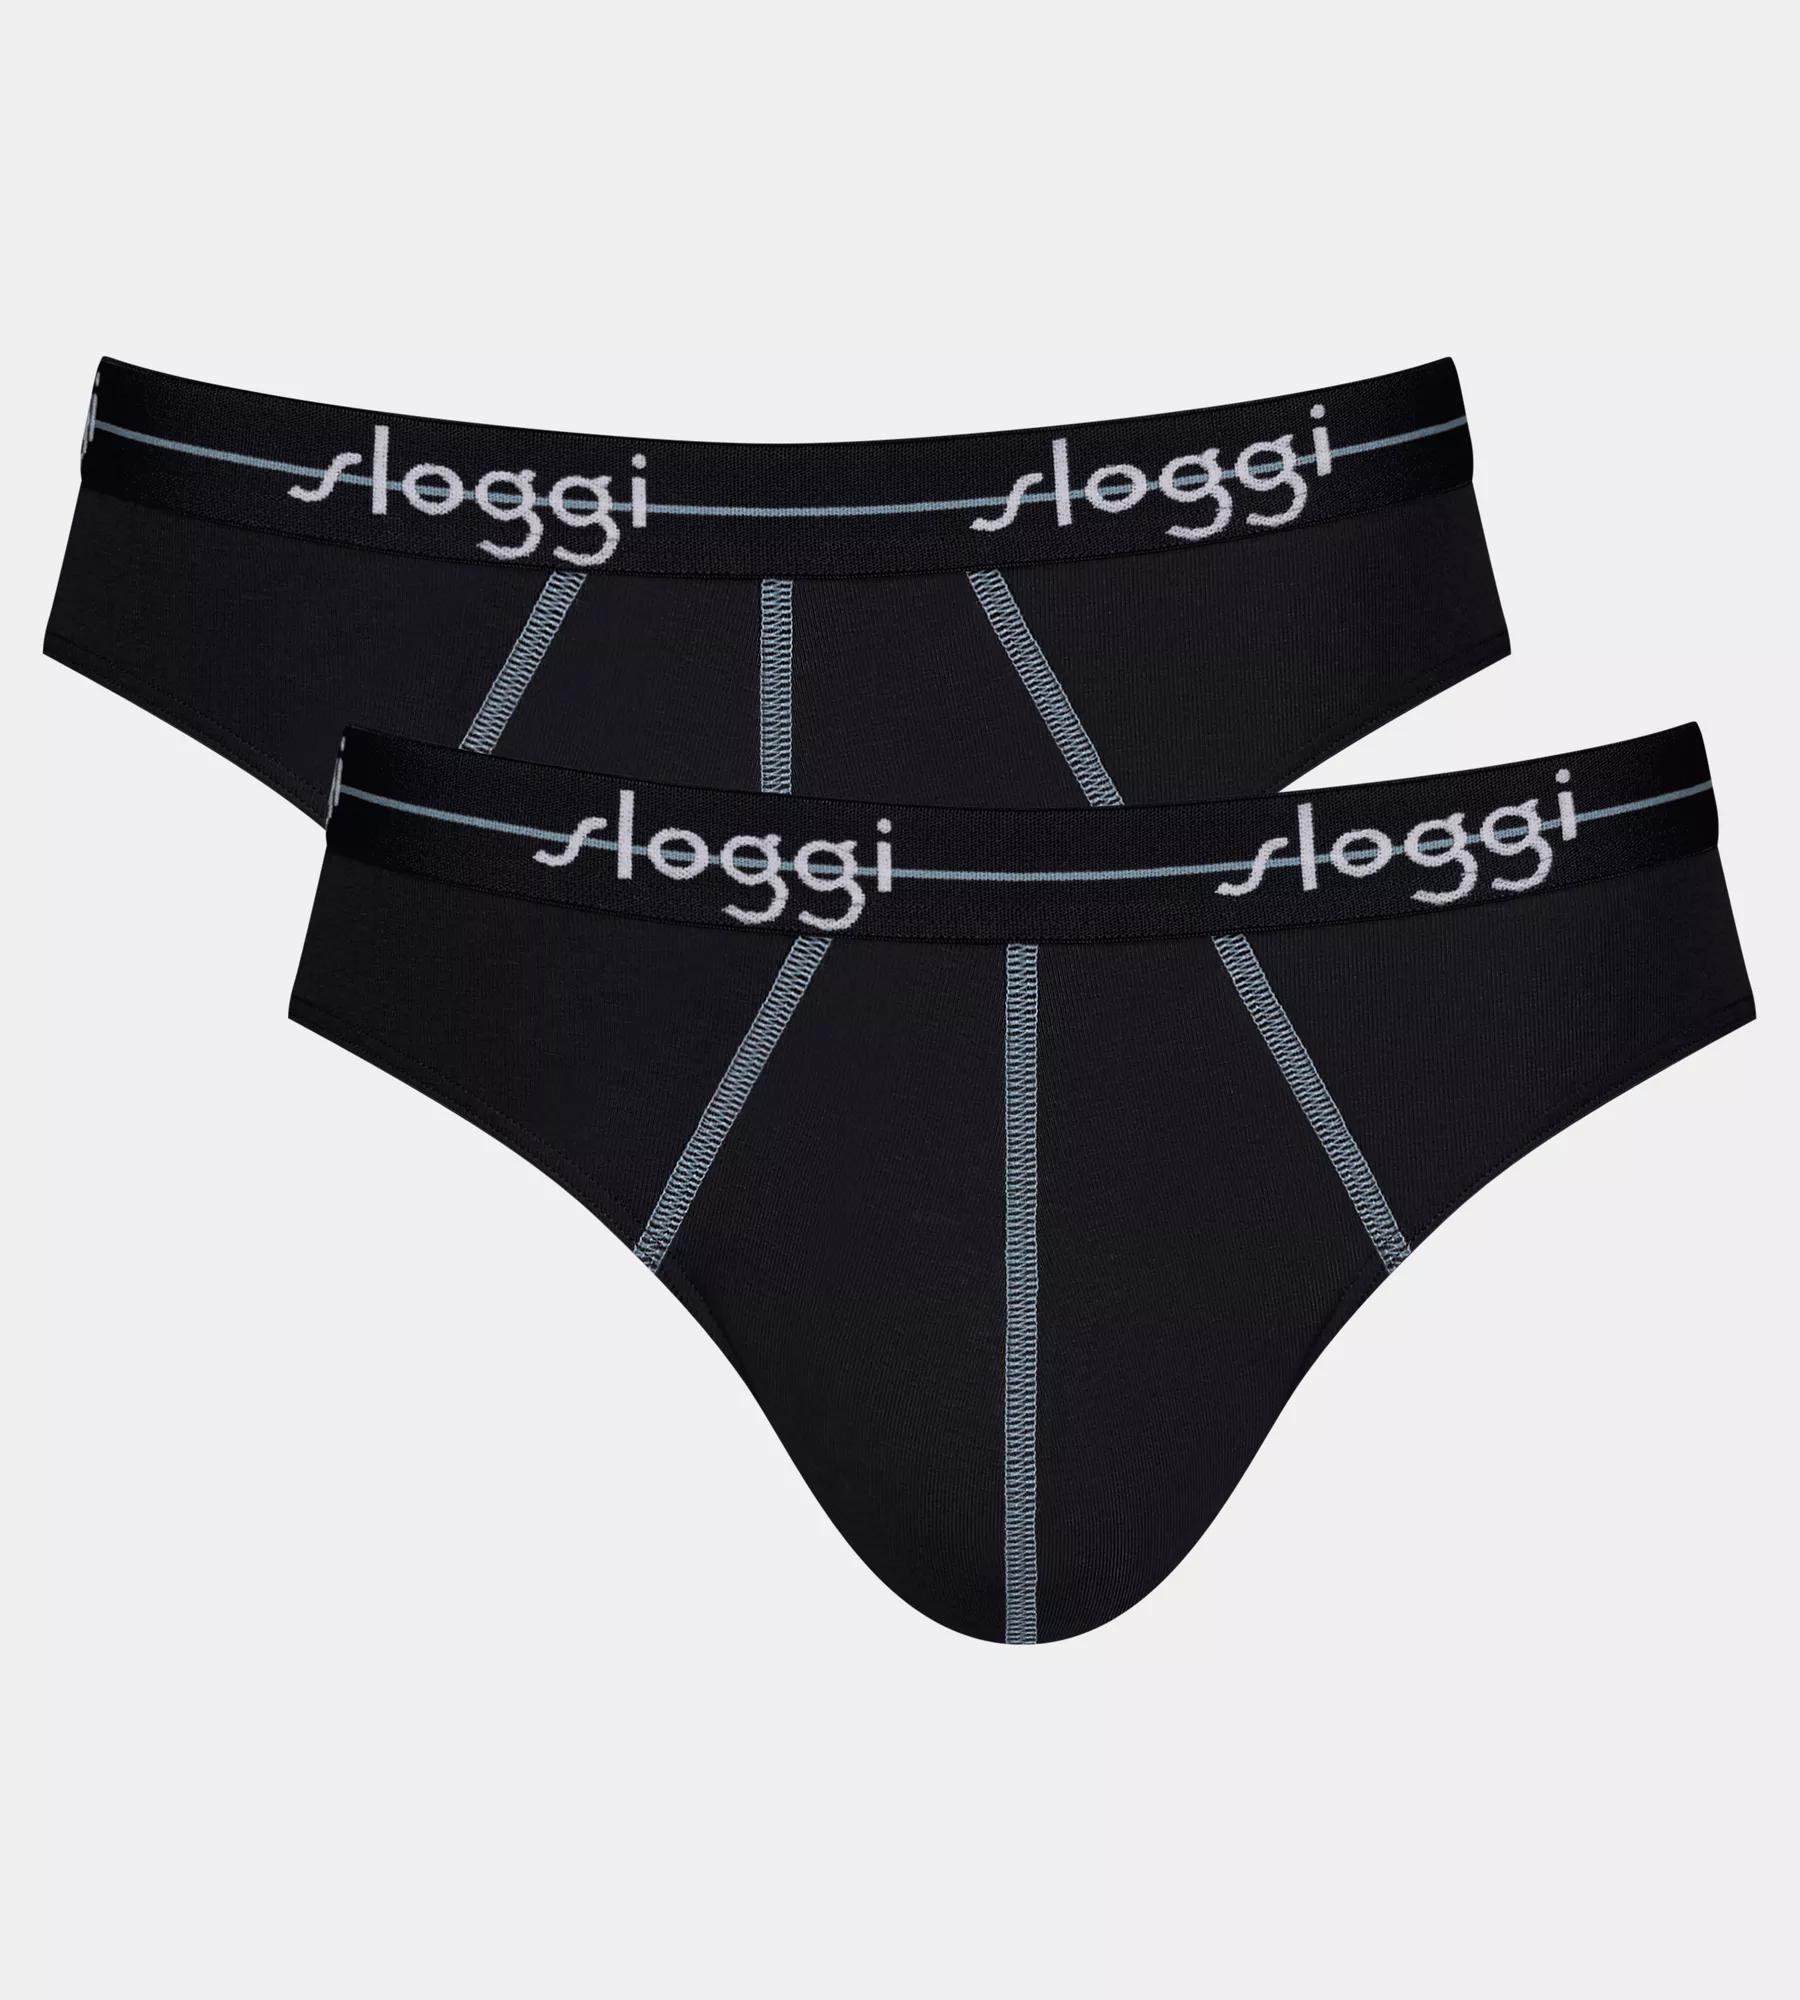 Sloggi Men's Basic Mini Brief 2P, Black, Large (Manufacturer Size: 36)